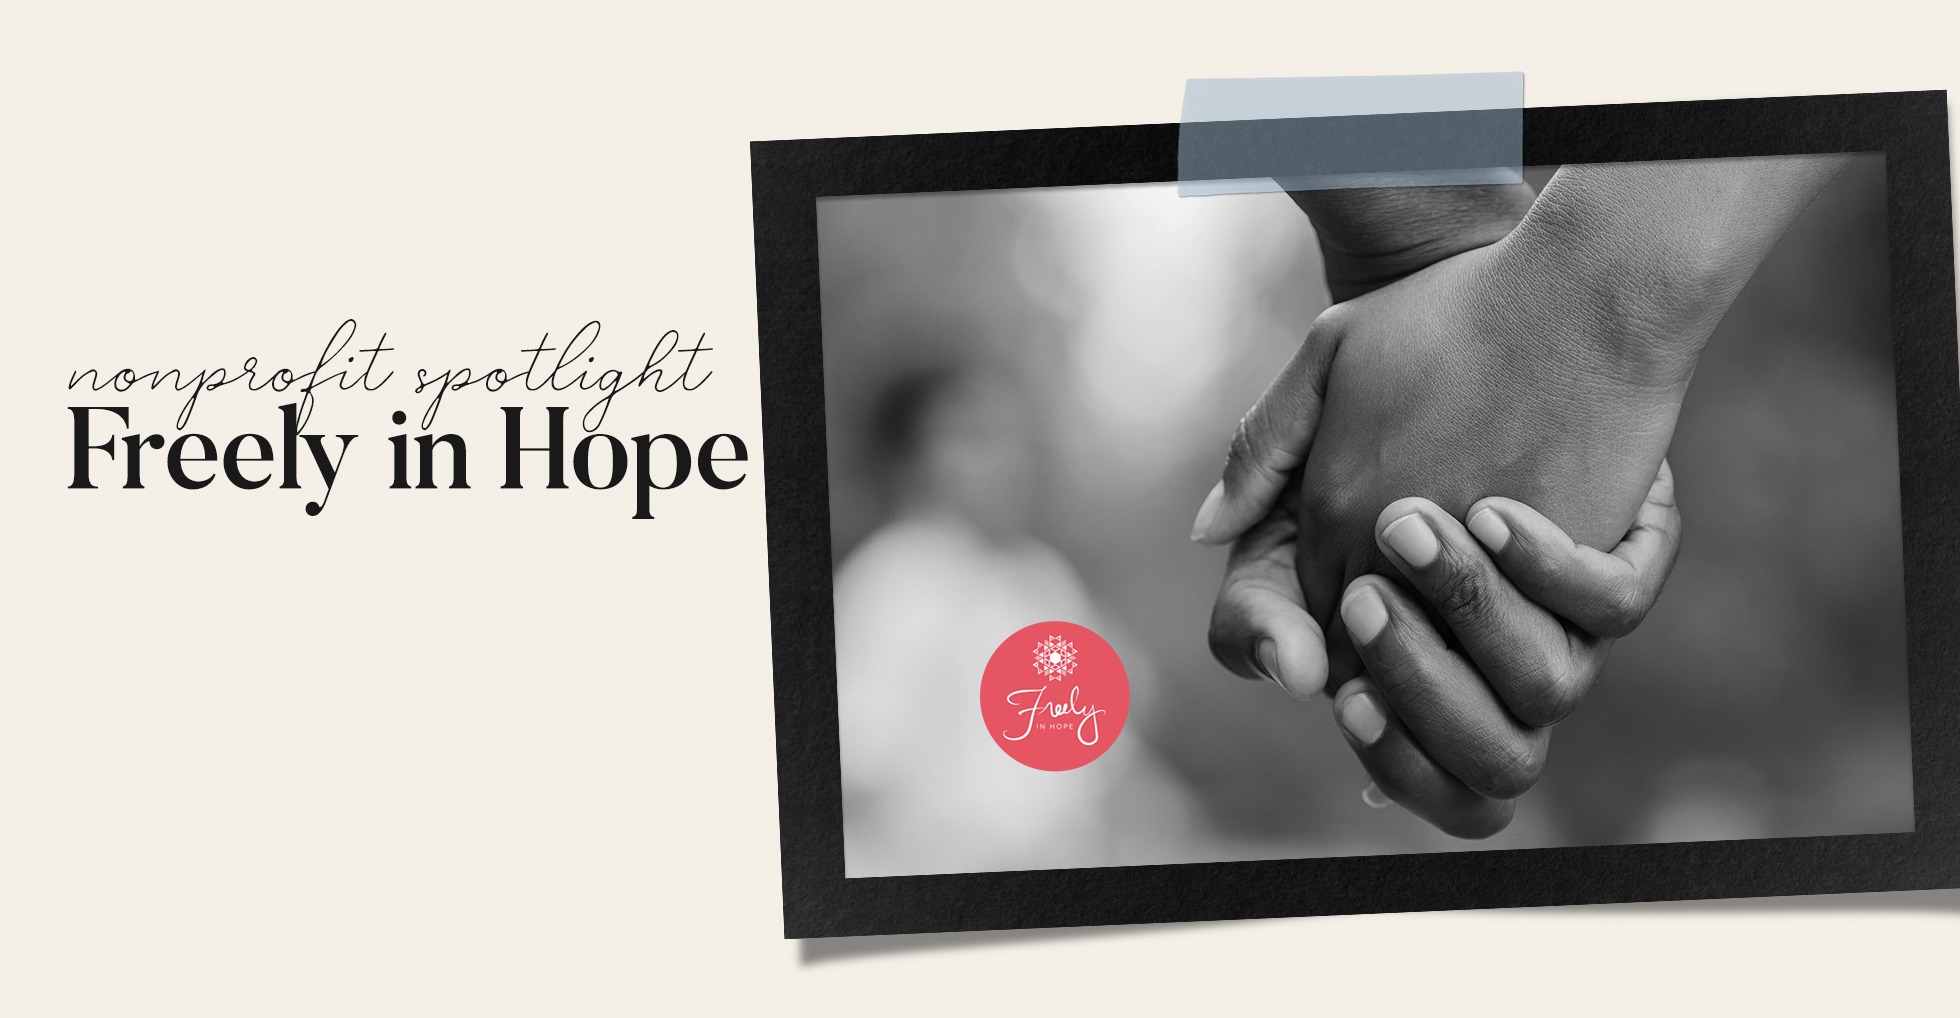 Freely in Hope: Nonprofit Spotlight